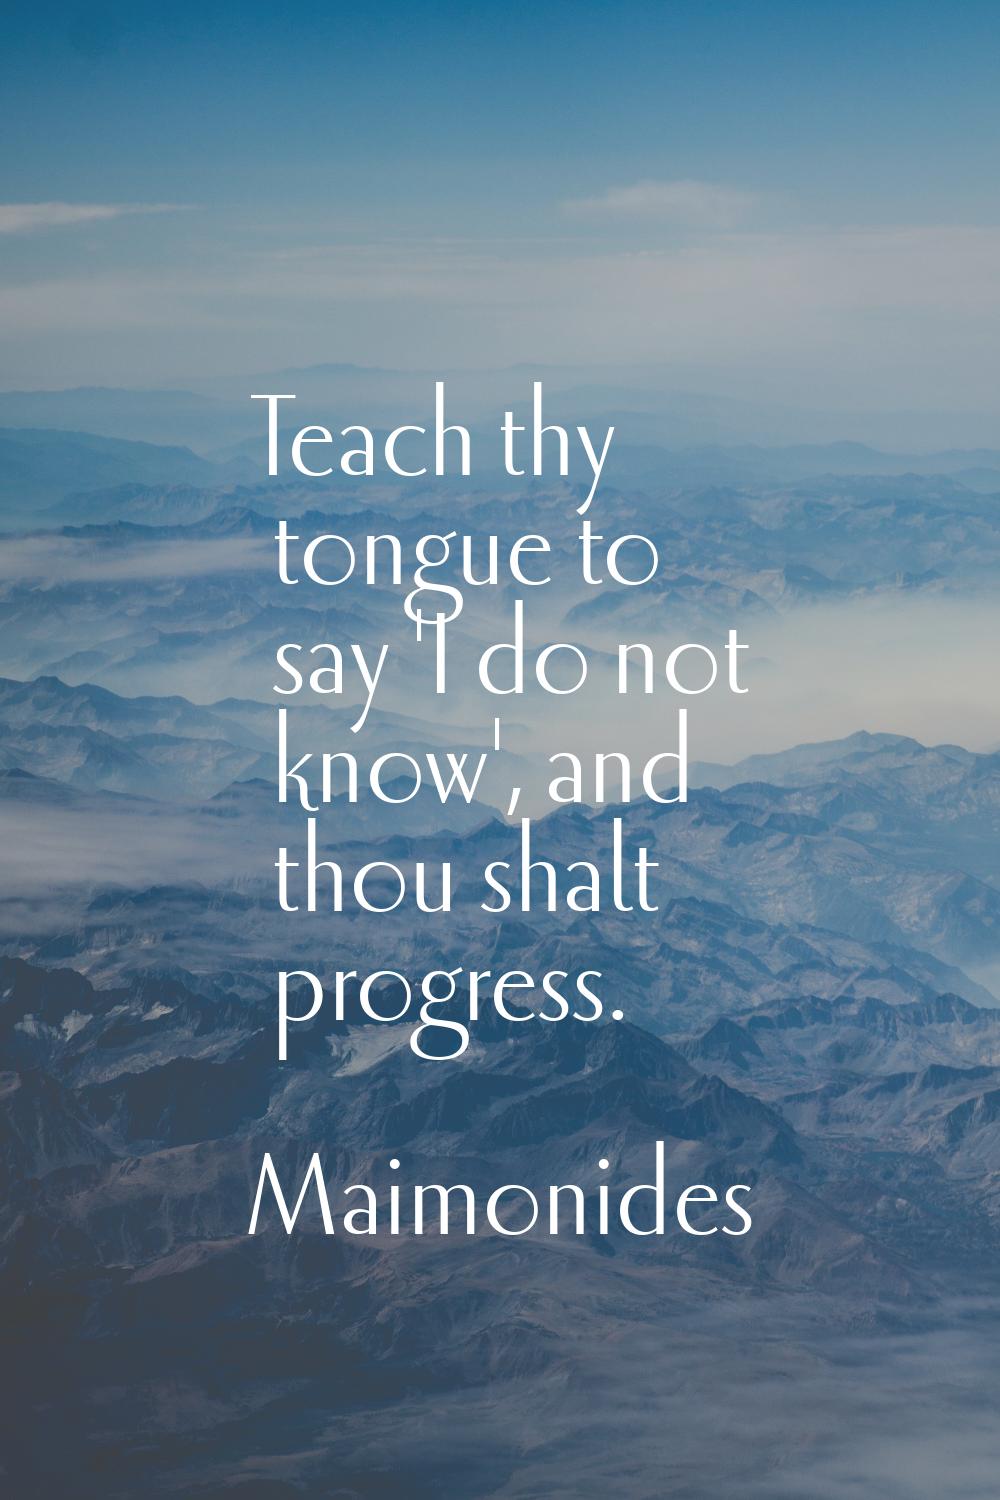 Teach thy tongue to say 'I do not know', and thou shalt progress.